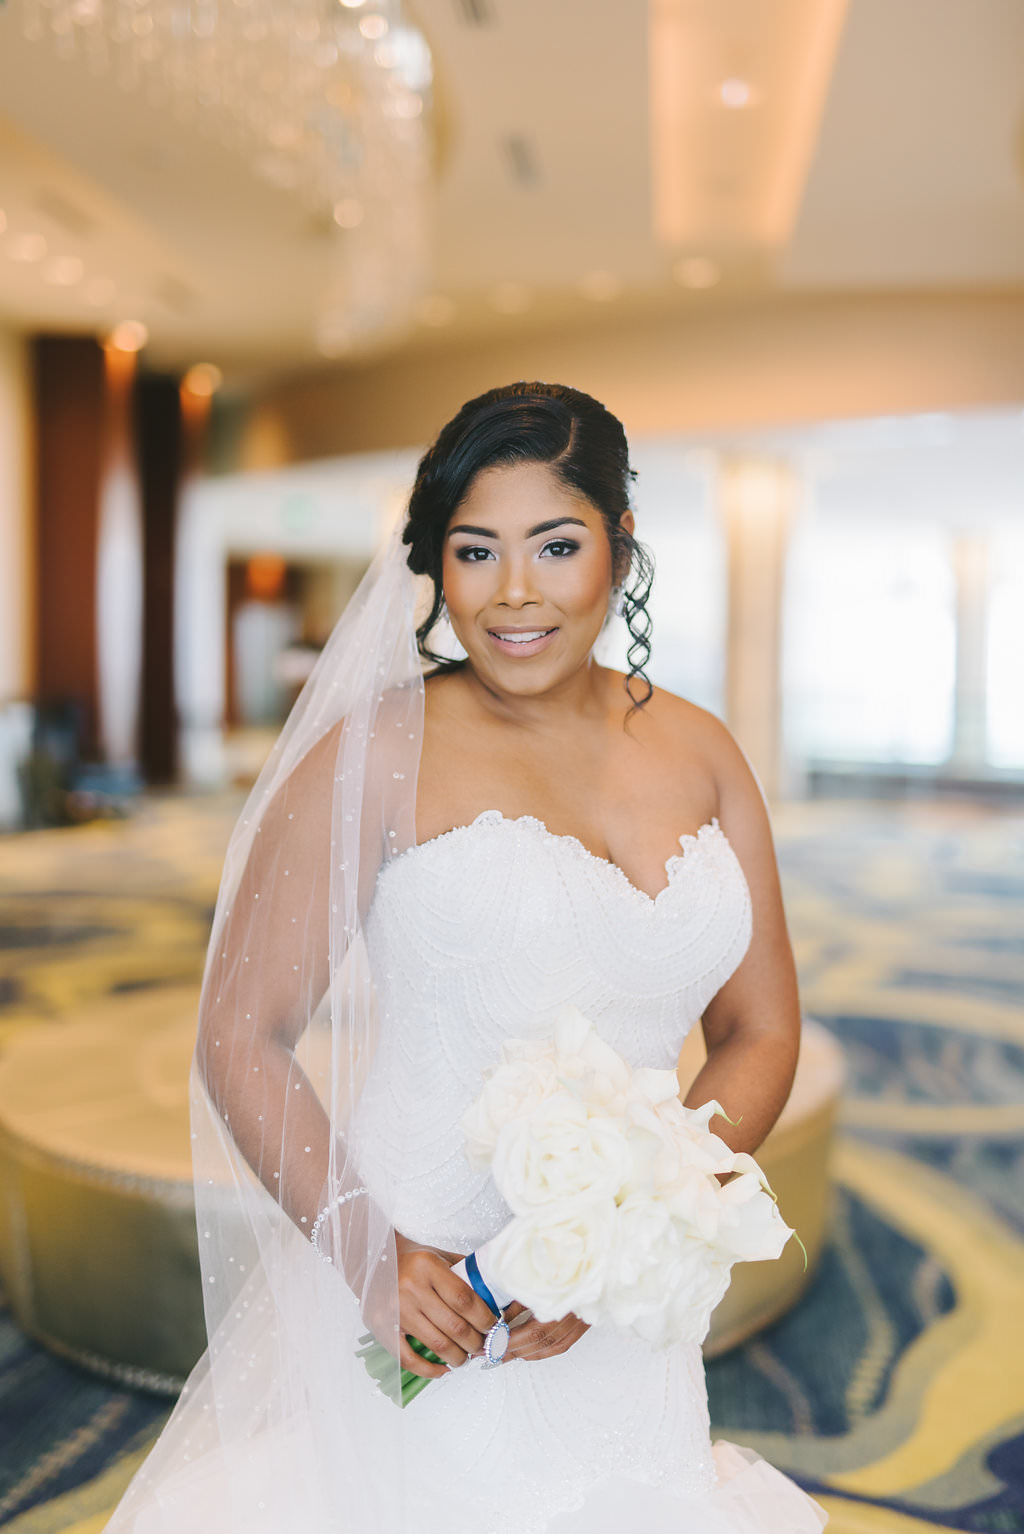 Florida Bride Wedding Portrait, Sweetheart Strapless Beaded Mermaid and Tulle Wedding Dress | Tampa Bay Wedding Photographer Kera Photography